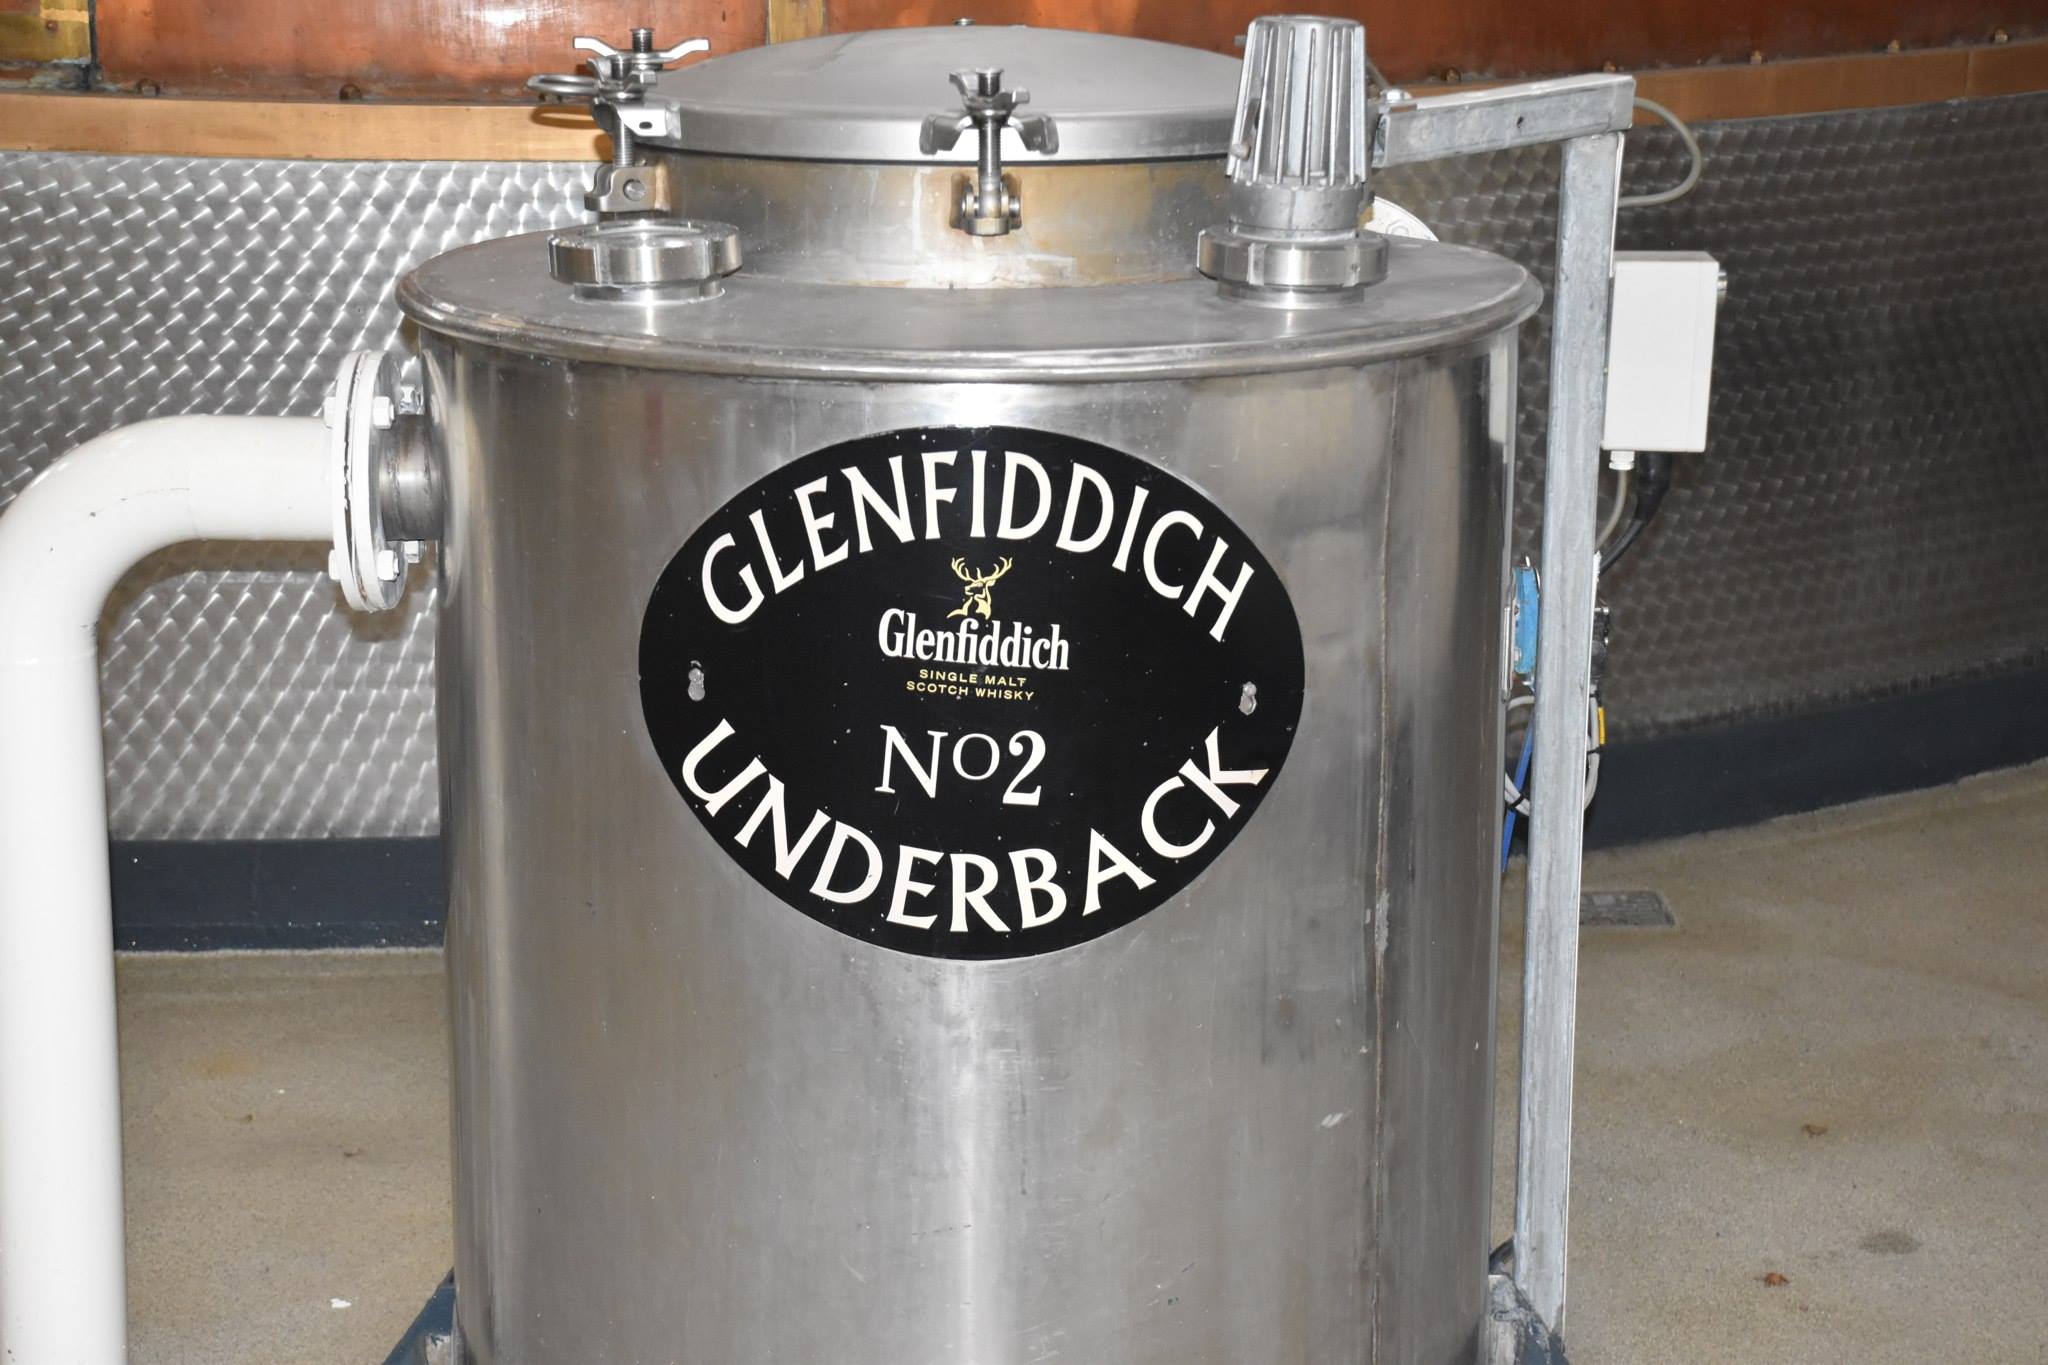 Glenfiddich Underback